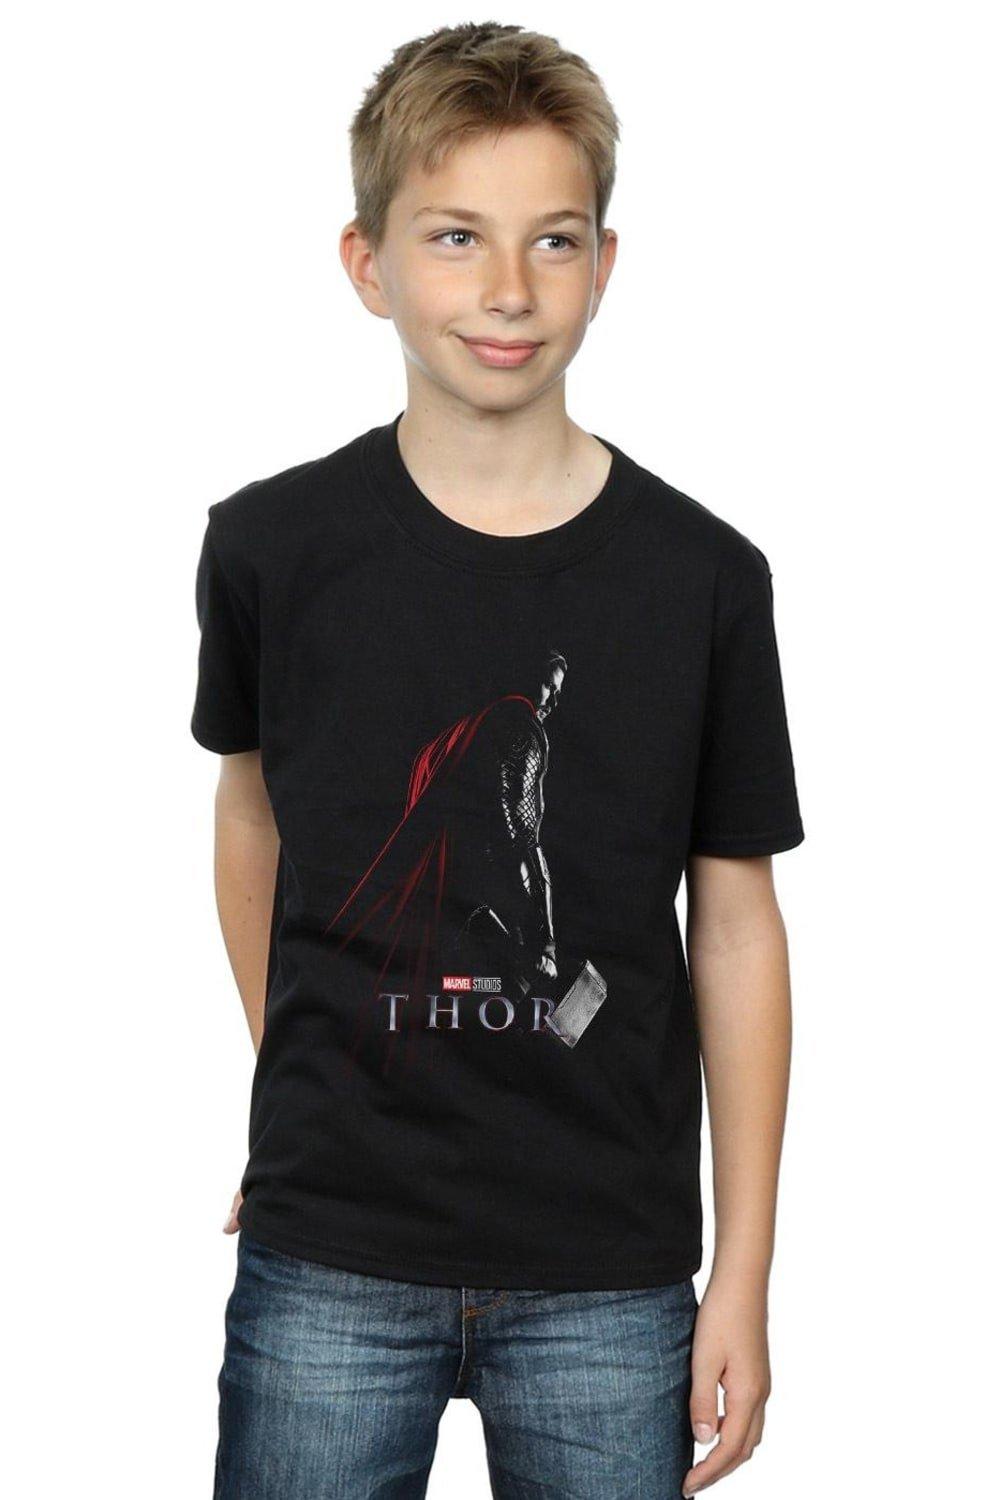 Thor Poster T-Shirt